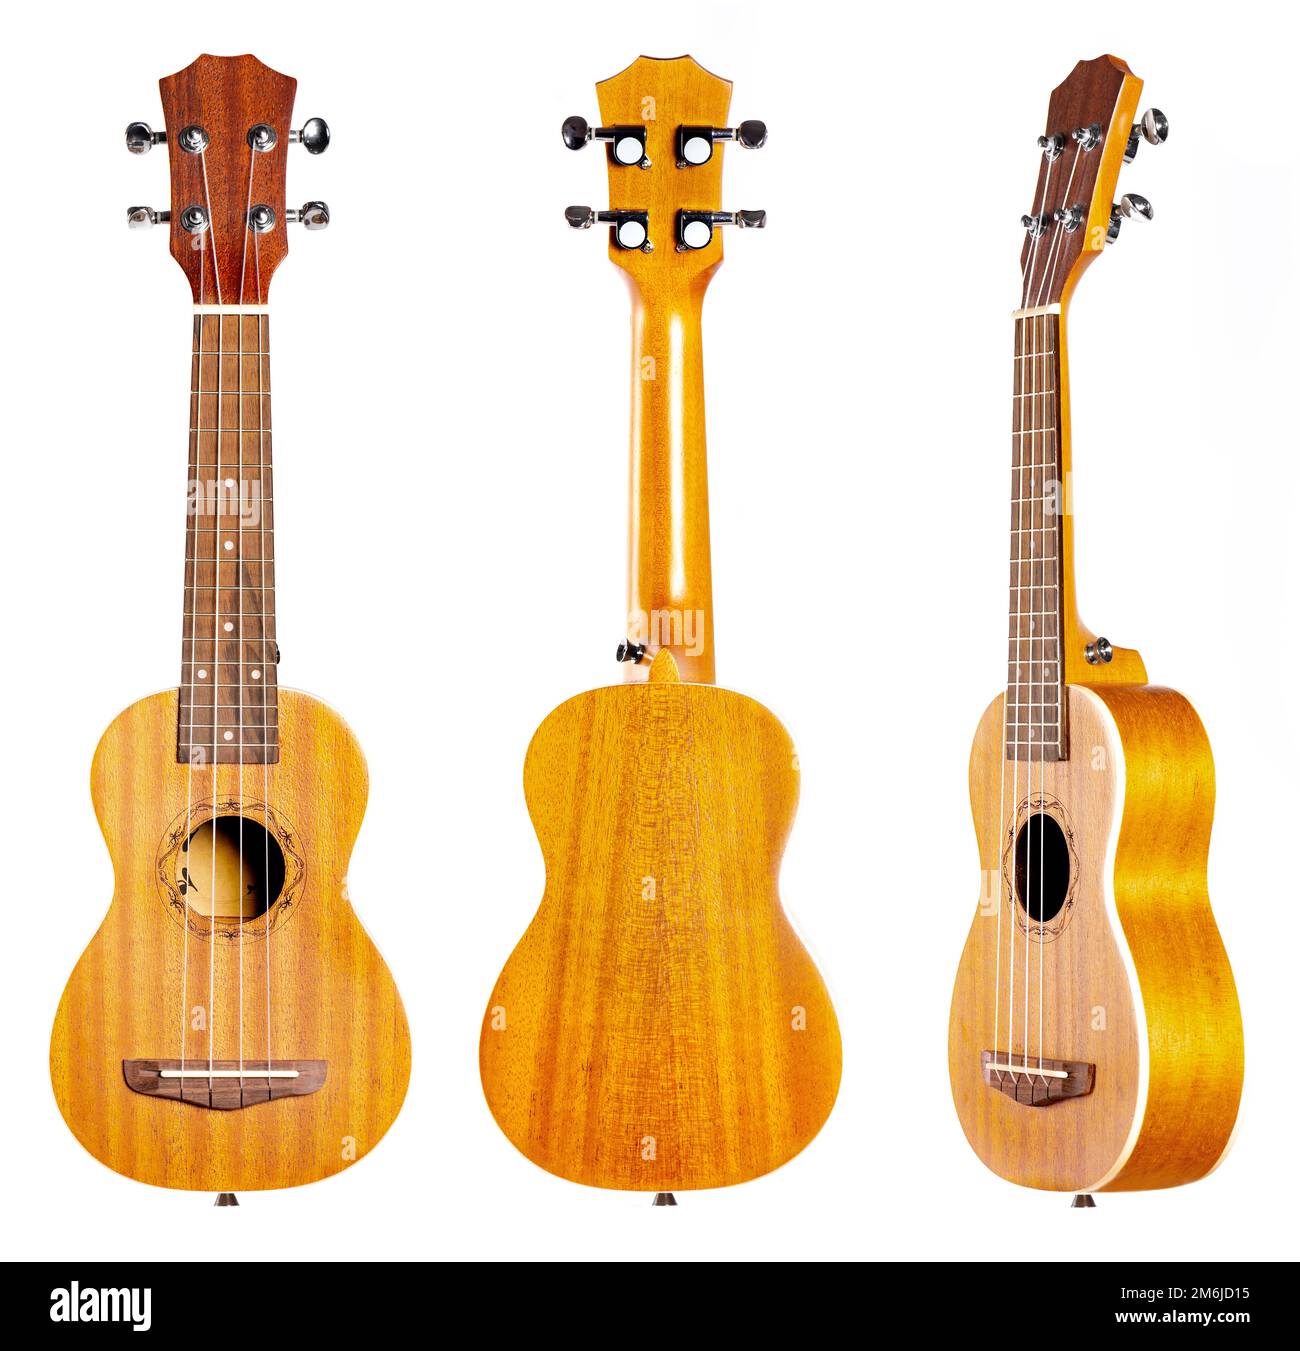 Chitarra marrone ukulele tre viste primo piano Foto Stock